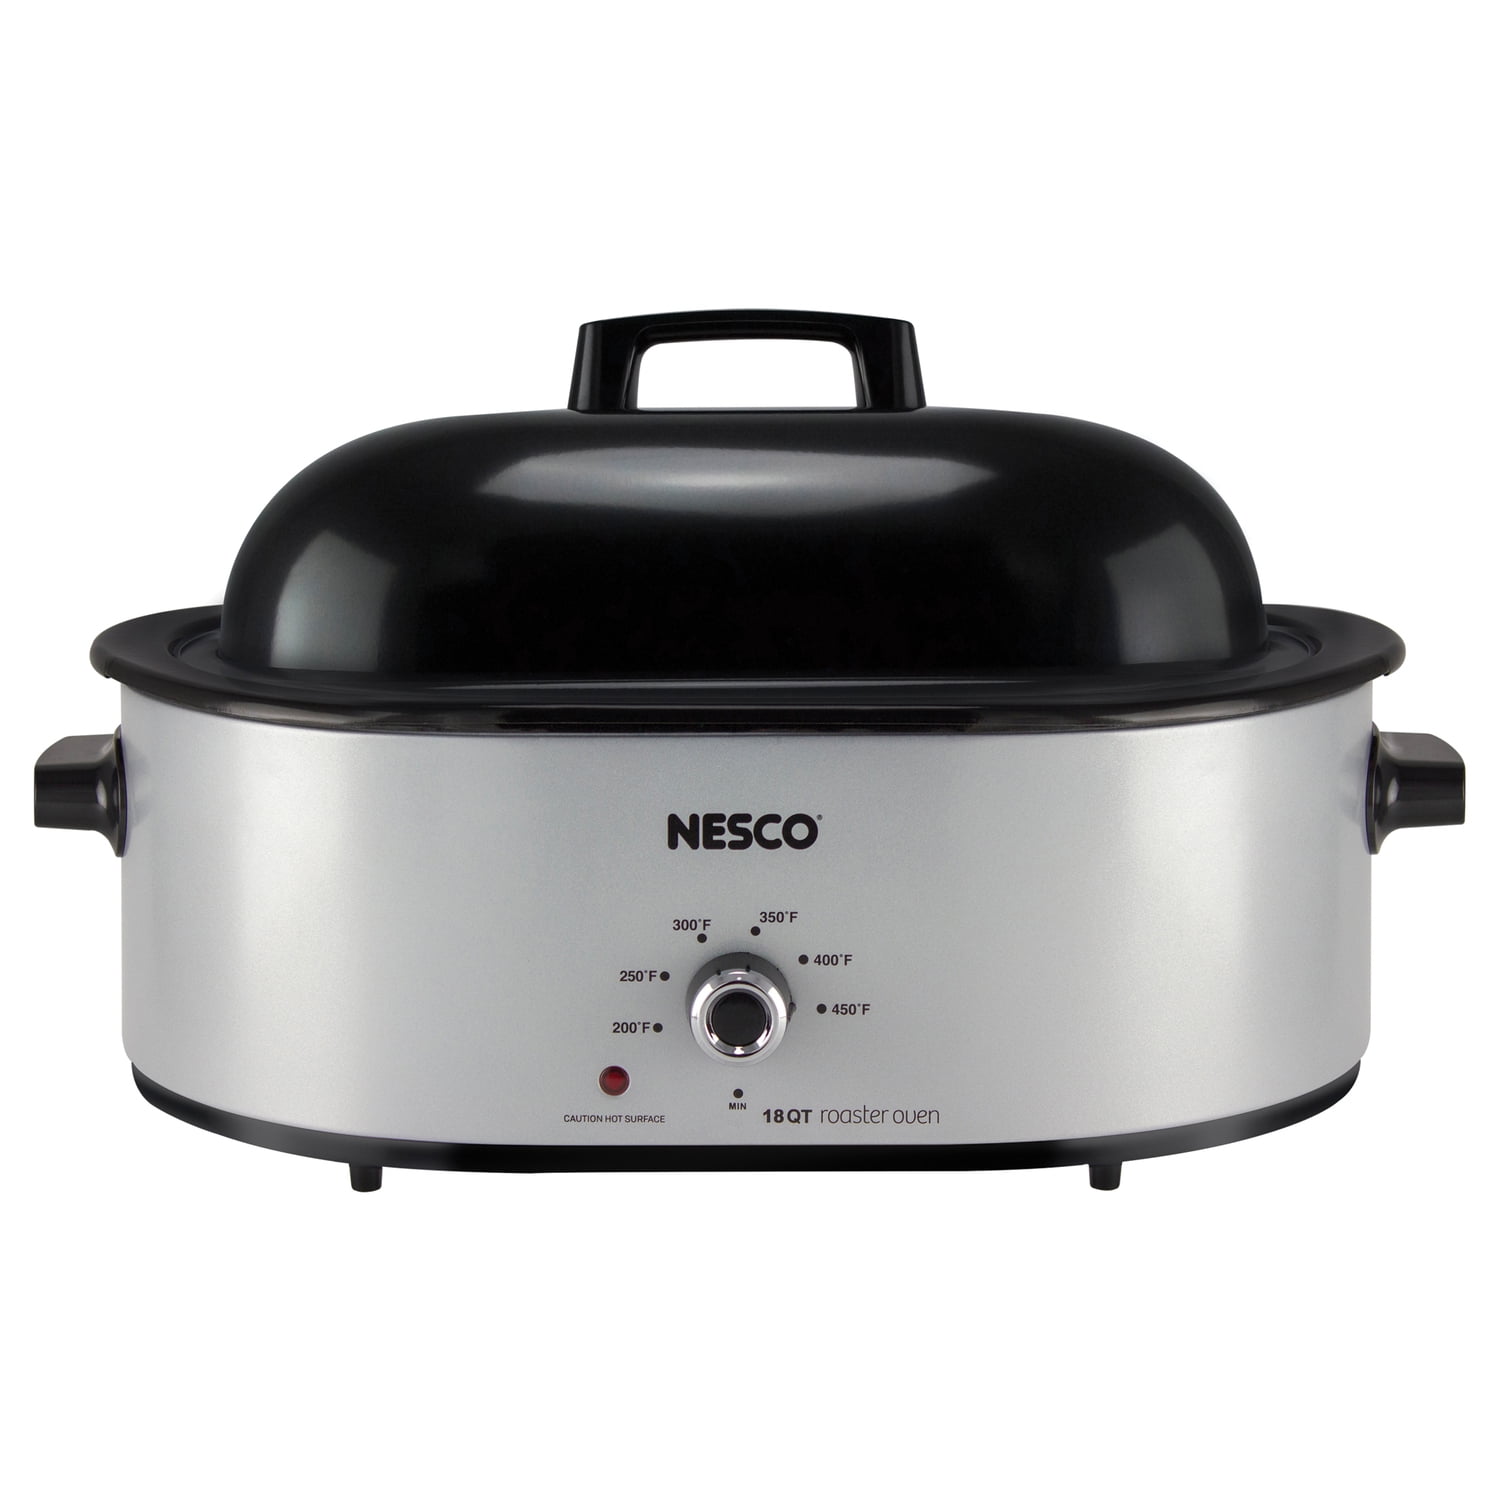 Nesco Roaster Oven,Model # 4808-47, 1425 watts, 120v - Bid Master Auctions